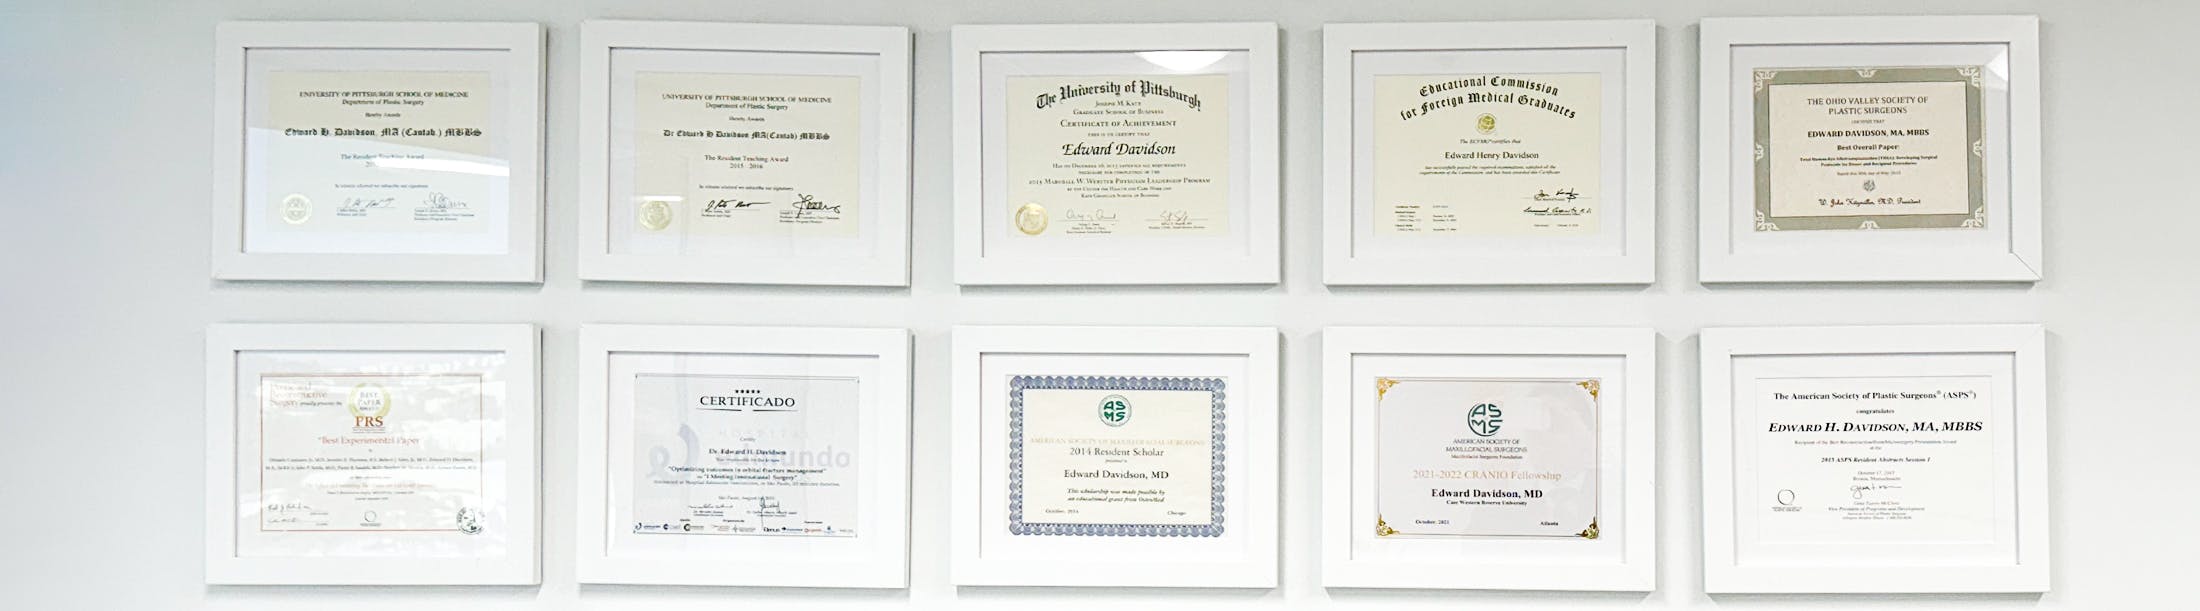 Photo of Dr. Davidson's diplomas and awards